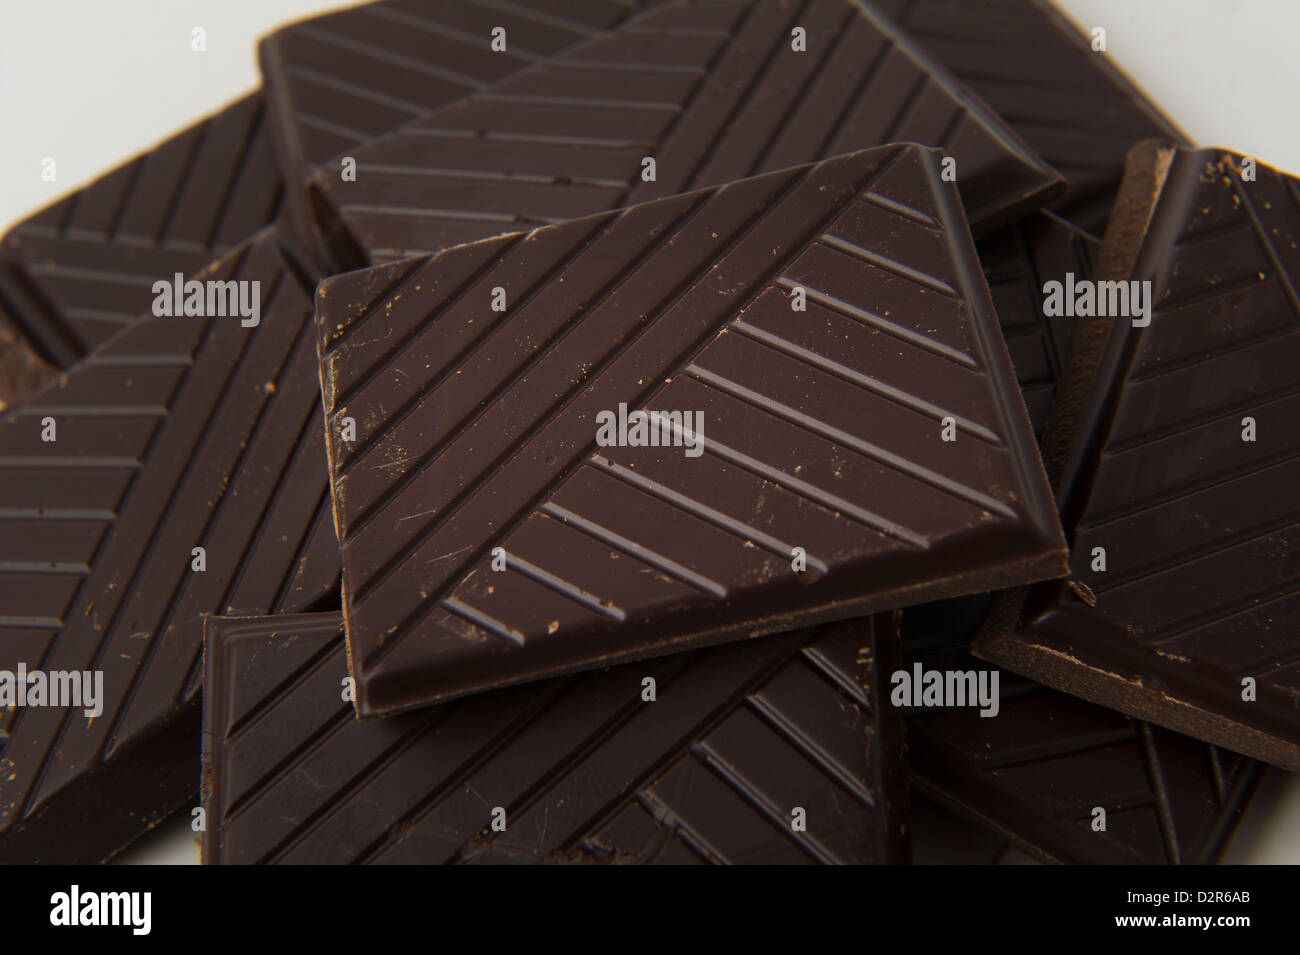 Chocolate oscuro Foto de stock